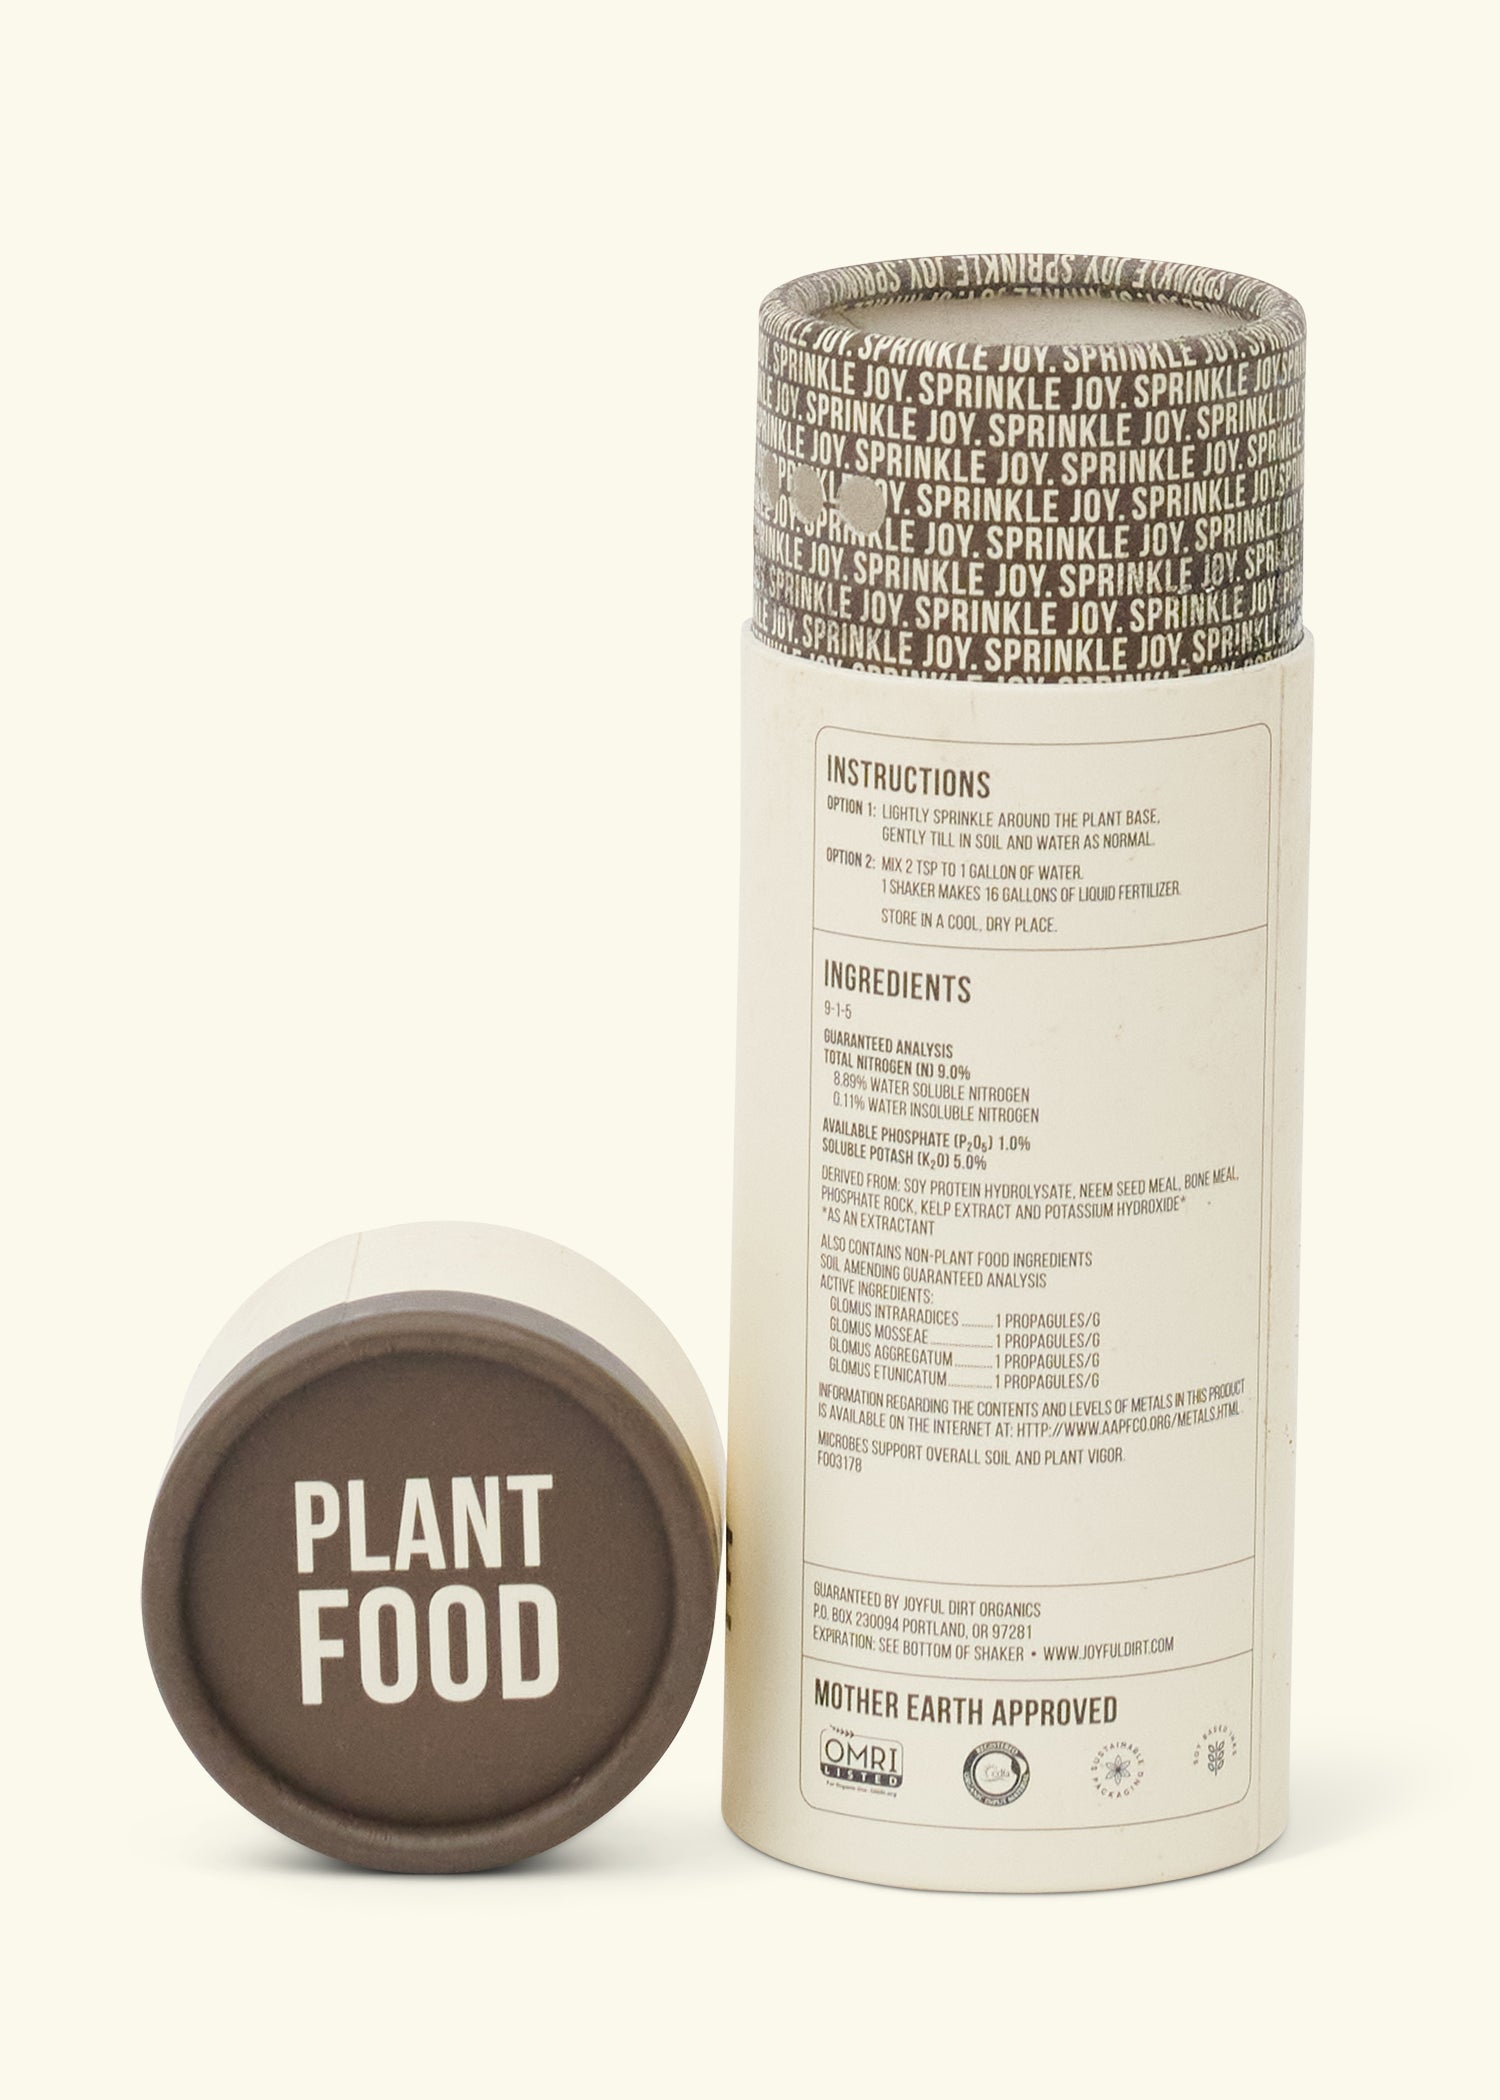 Organic Fertilizer Shaker Accessory Joyful Dirt Vegan All-Purpose